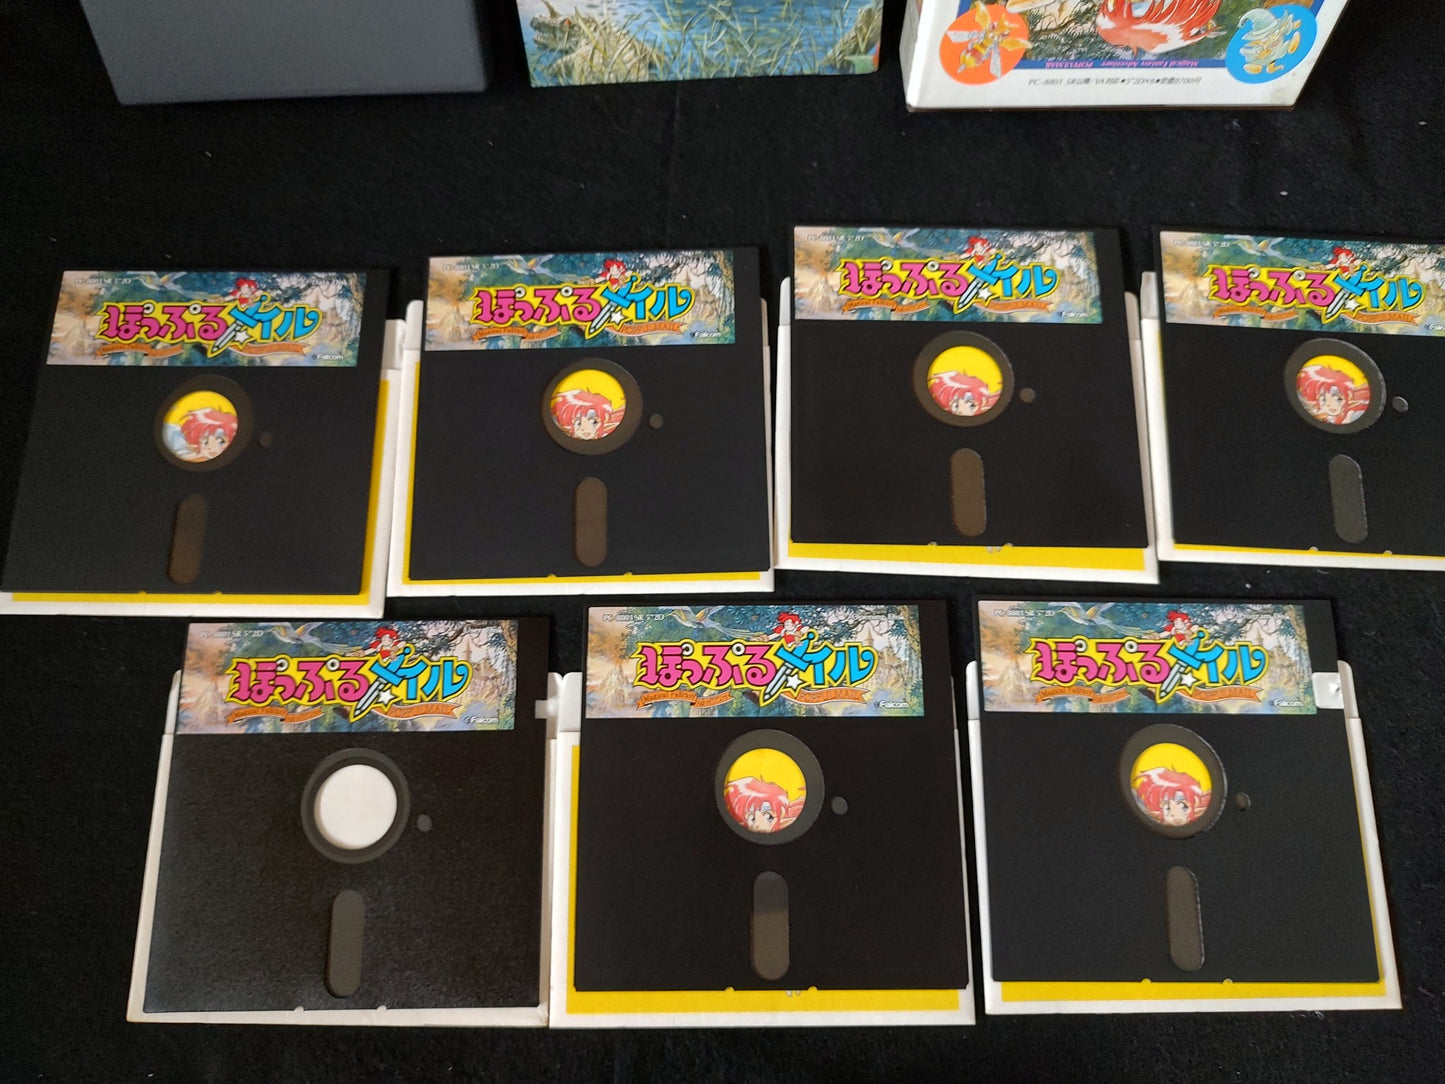 PC-8801 PC88 Popful Mail Game Disks, Manual, Box set, Working-f1117-